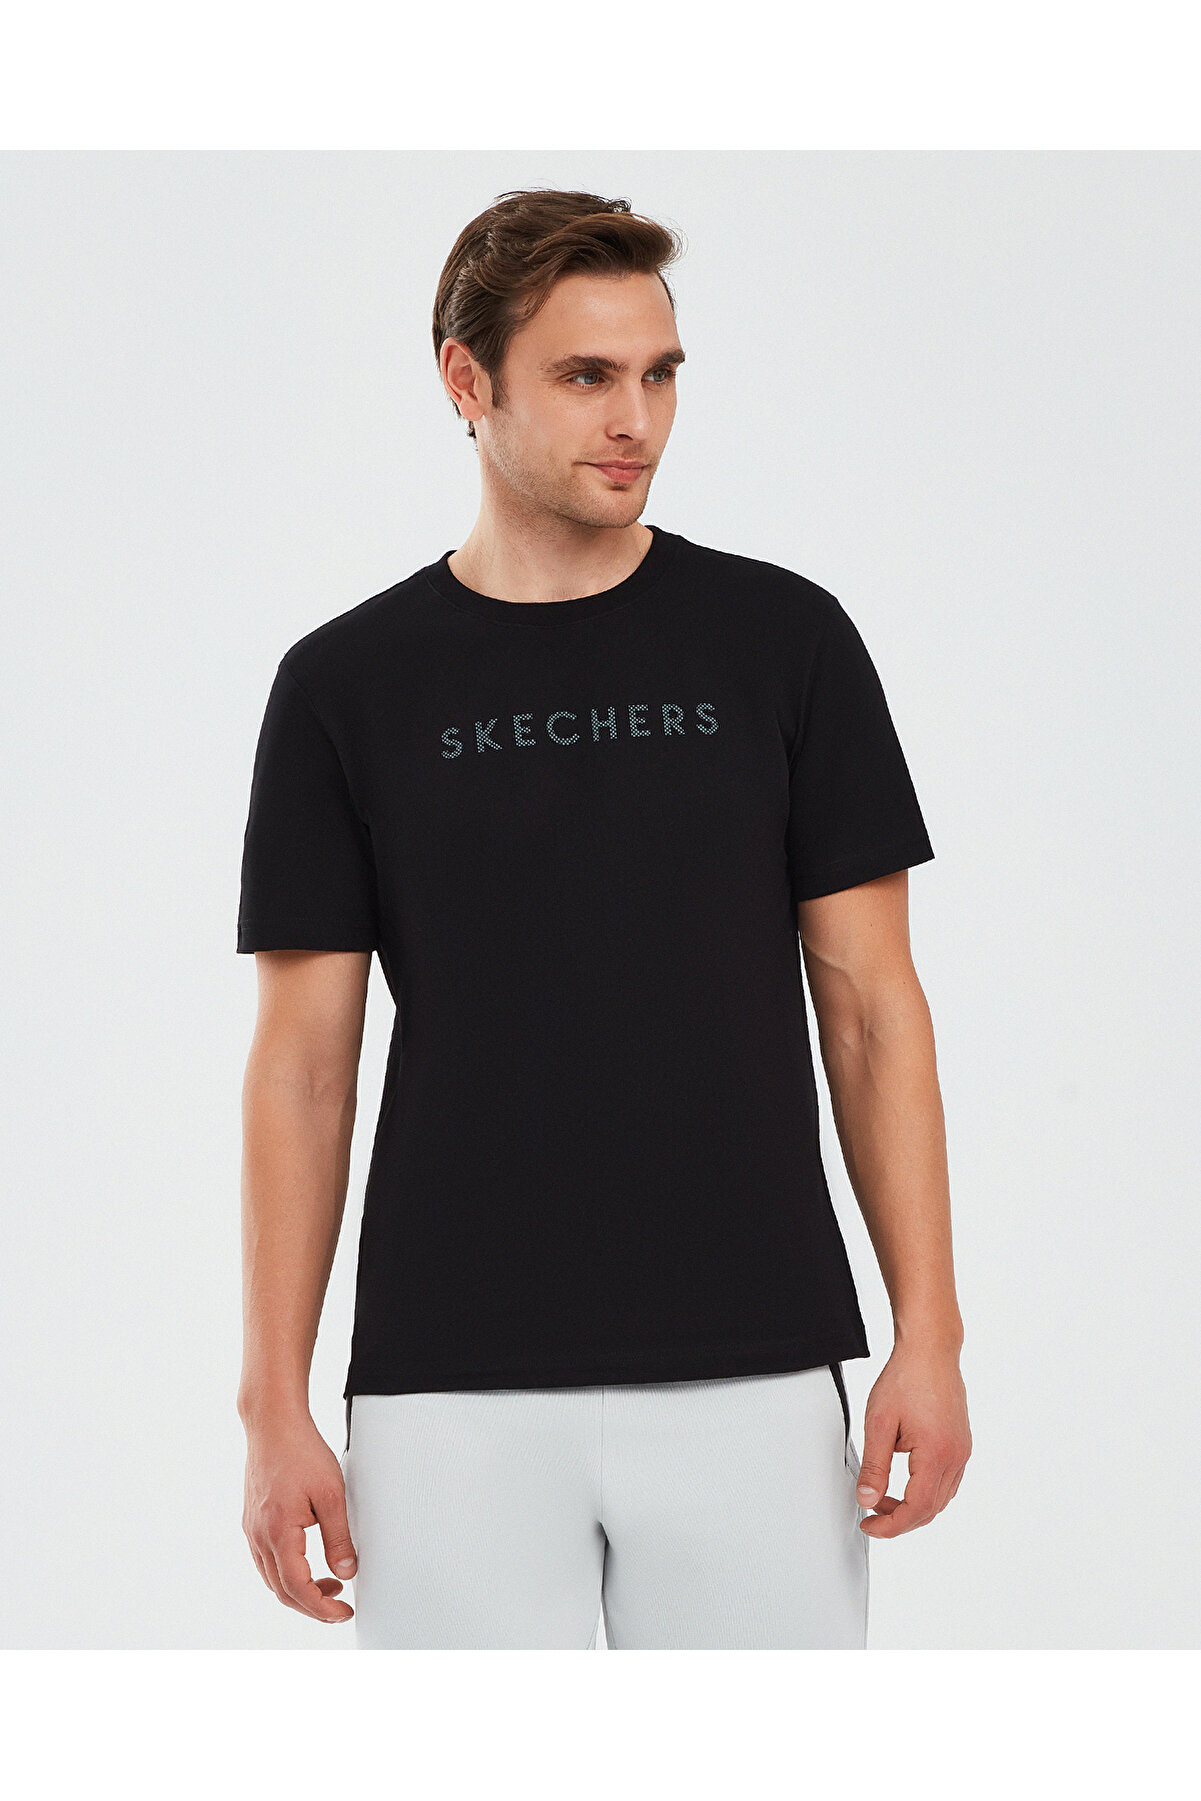 Skechers M Graphic Tee Camo Big Logo T-shirt Erkek Siyah Tshirt S212191-001